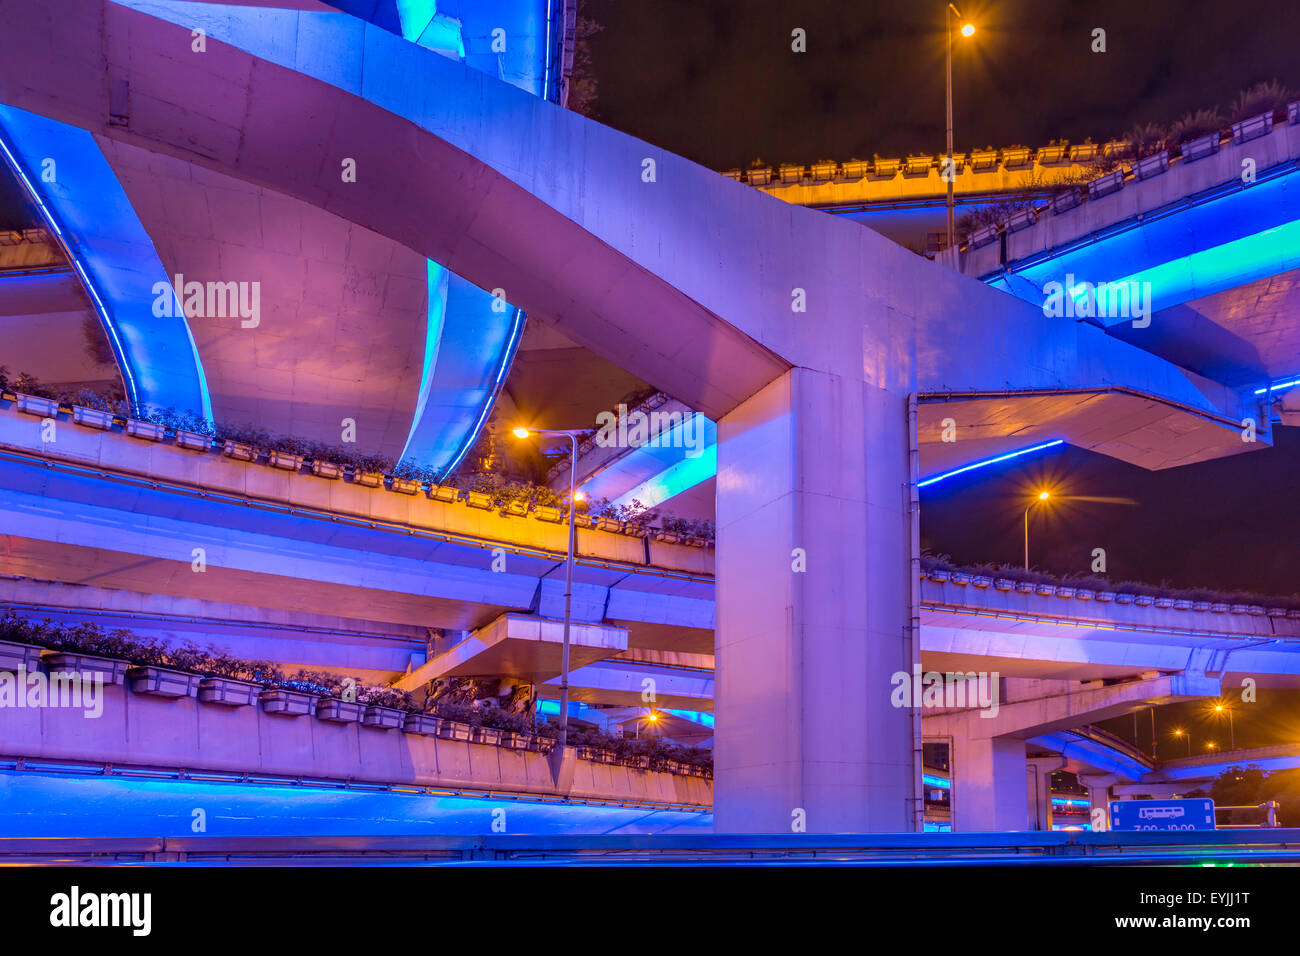 Illuminated bridges of the elevated highway system at night Stock Photo